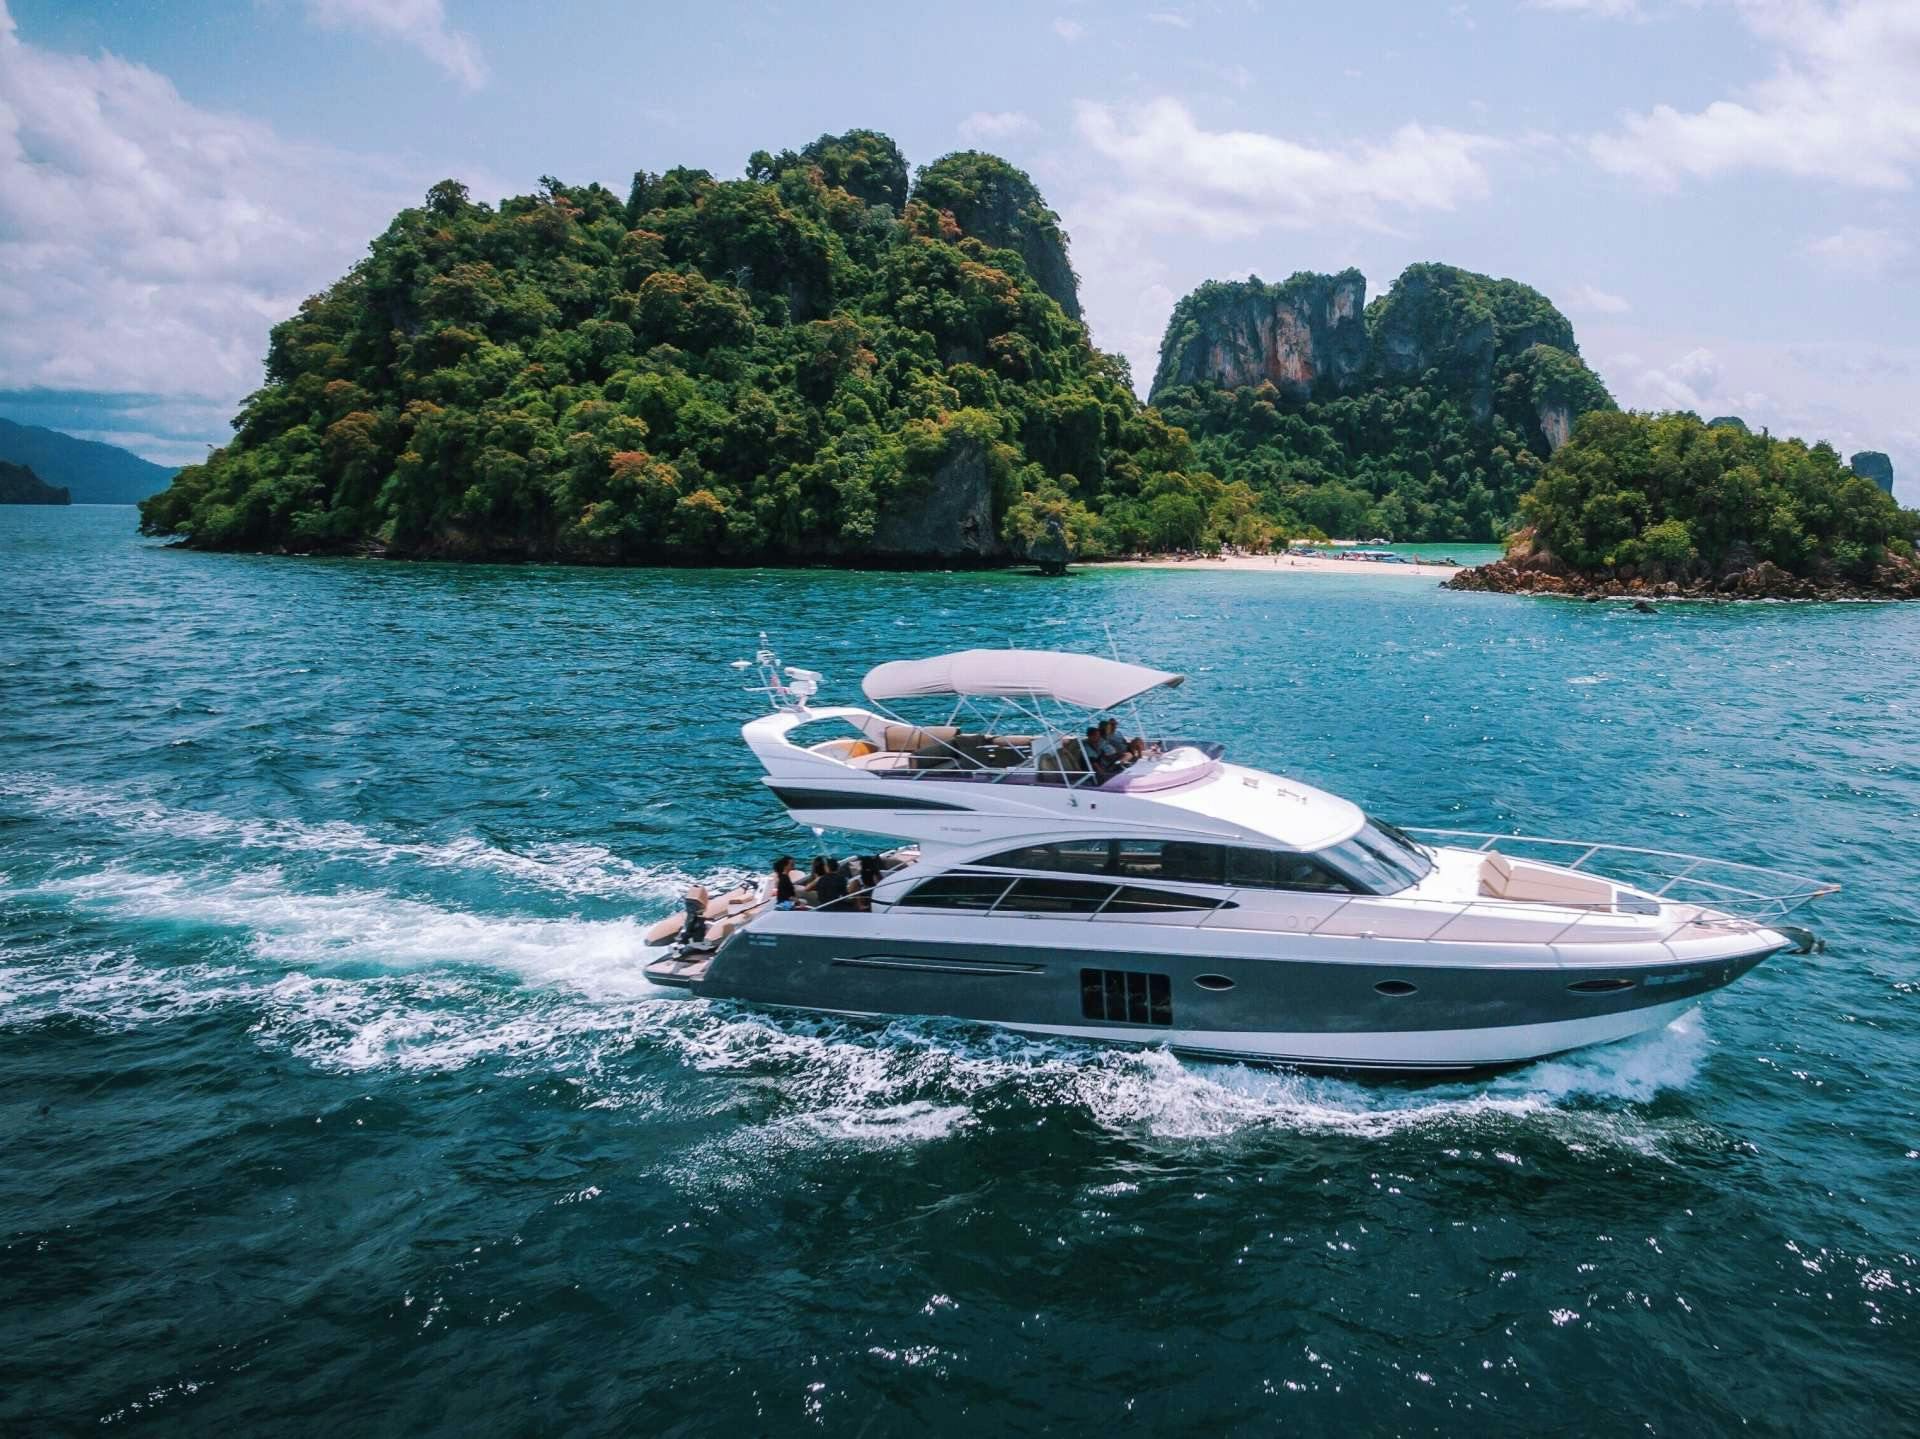 mayavee - Yacht Charter Phuket & Boat hire in SE Asia 1